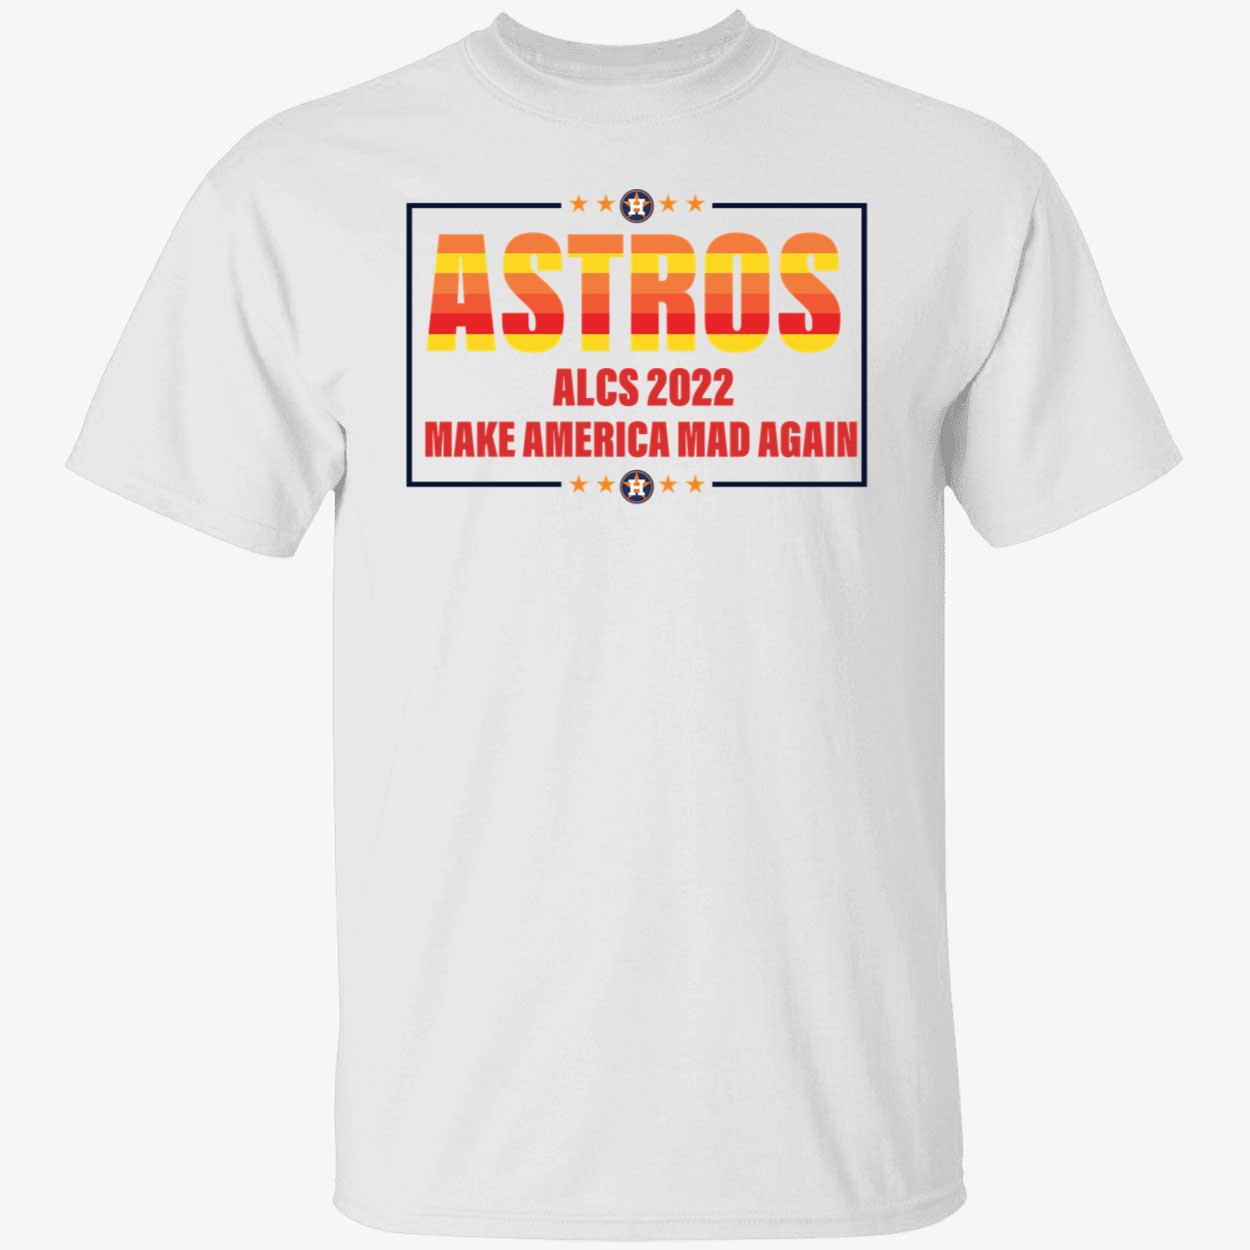 Endastore Astros alcs 2022 Make A America Mad Again Shirt